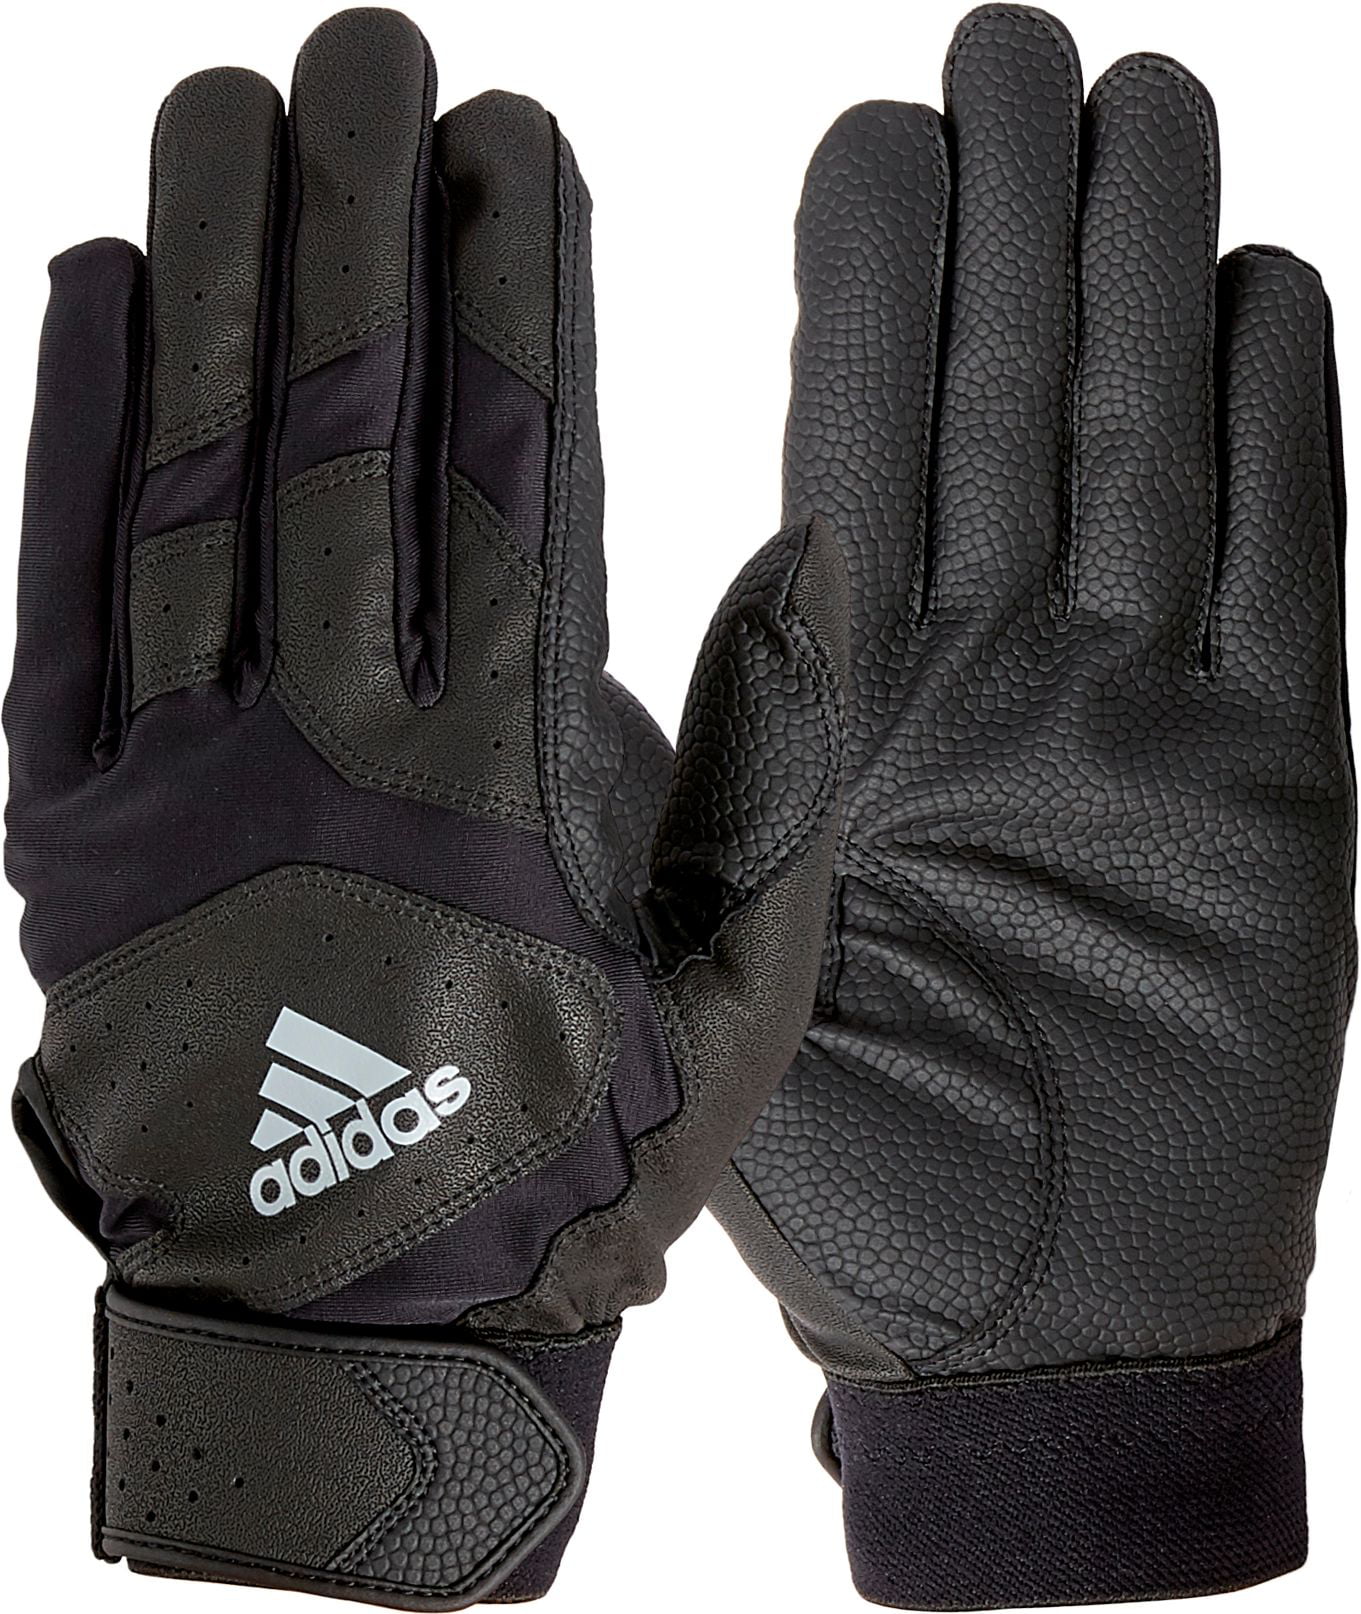 adidas softball batting gloves